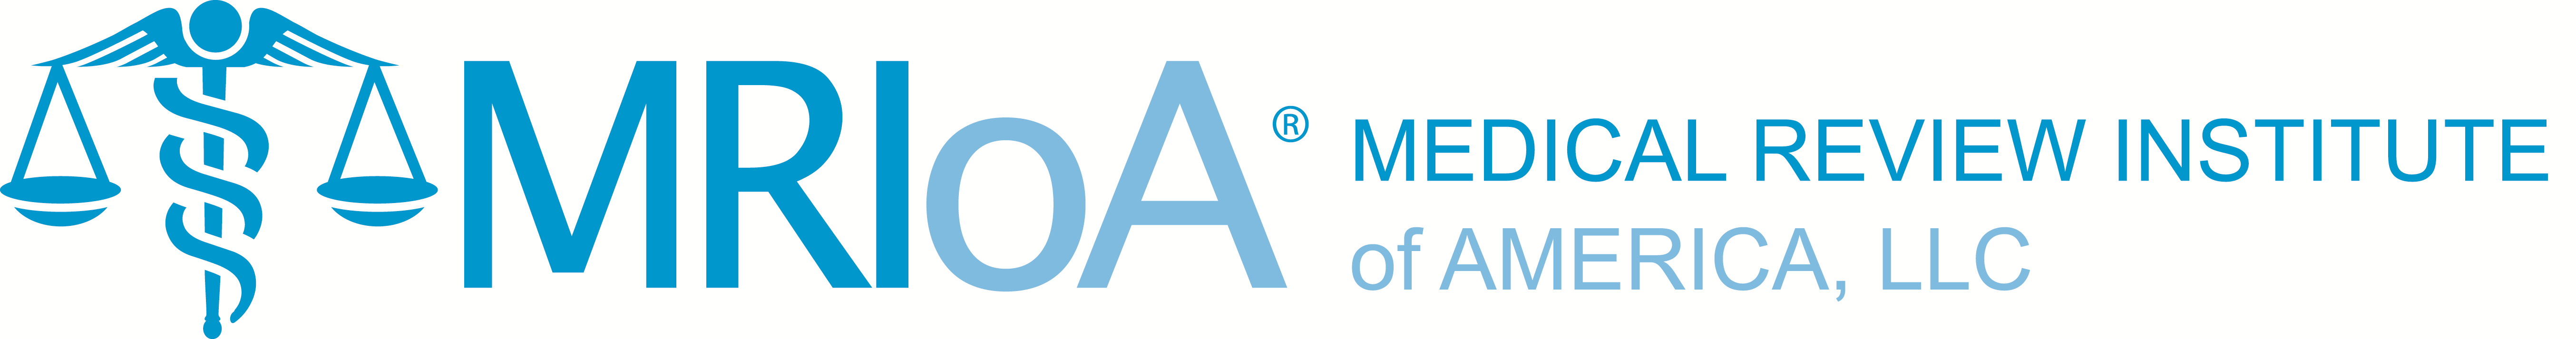 Medical Review Institute of America logo